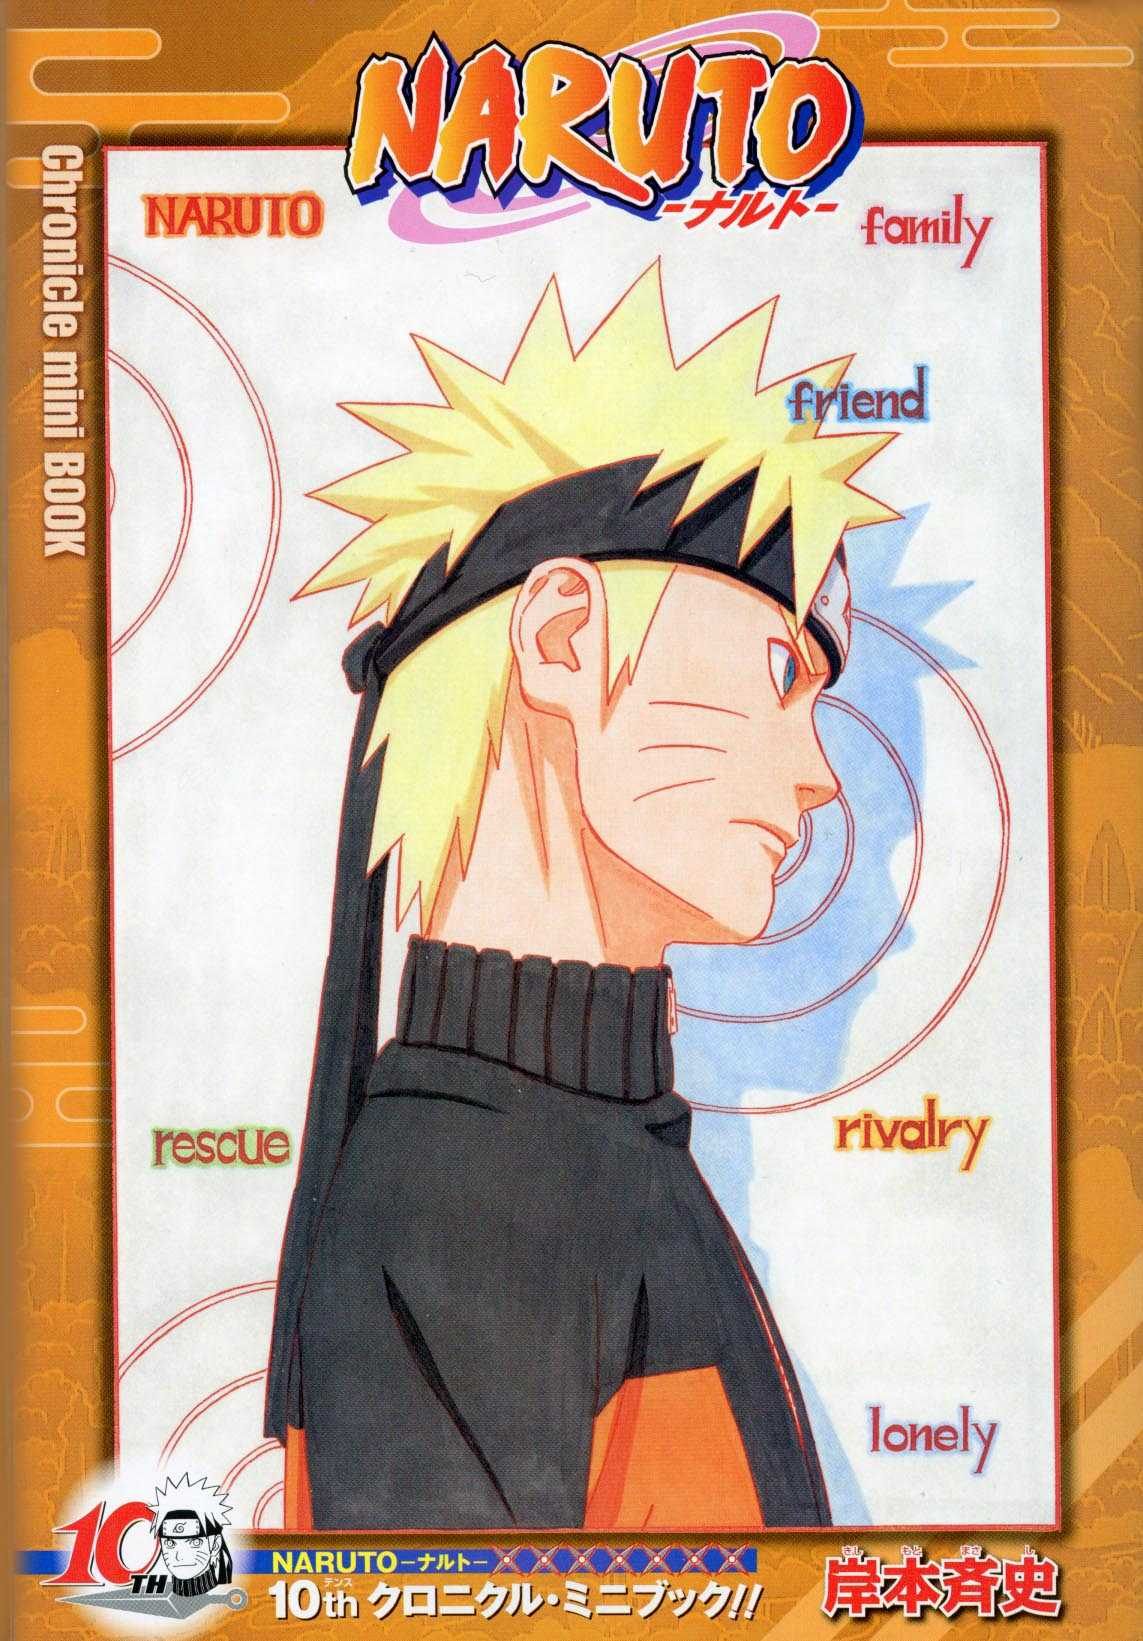 The Naruto Chronicle